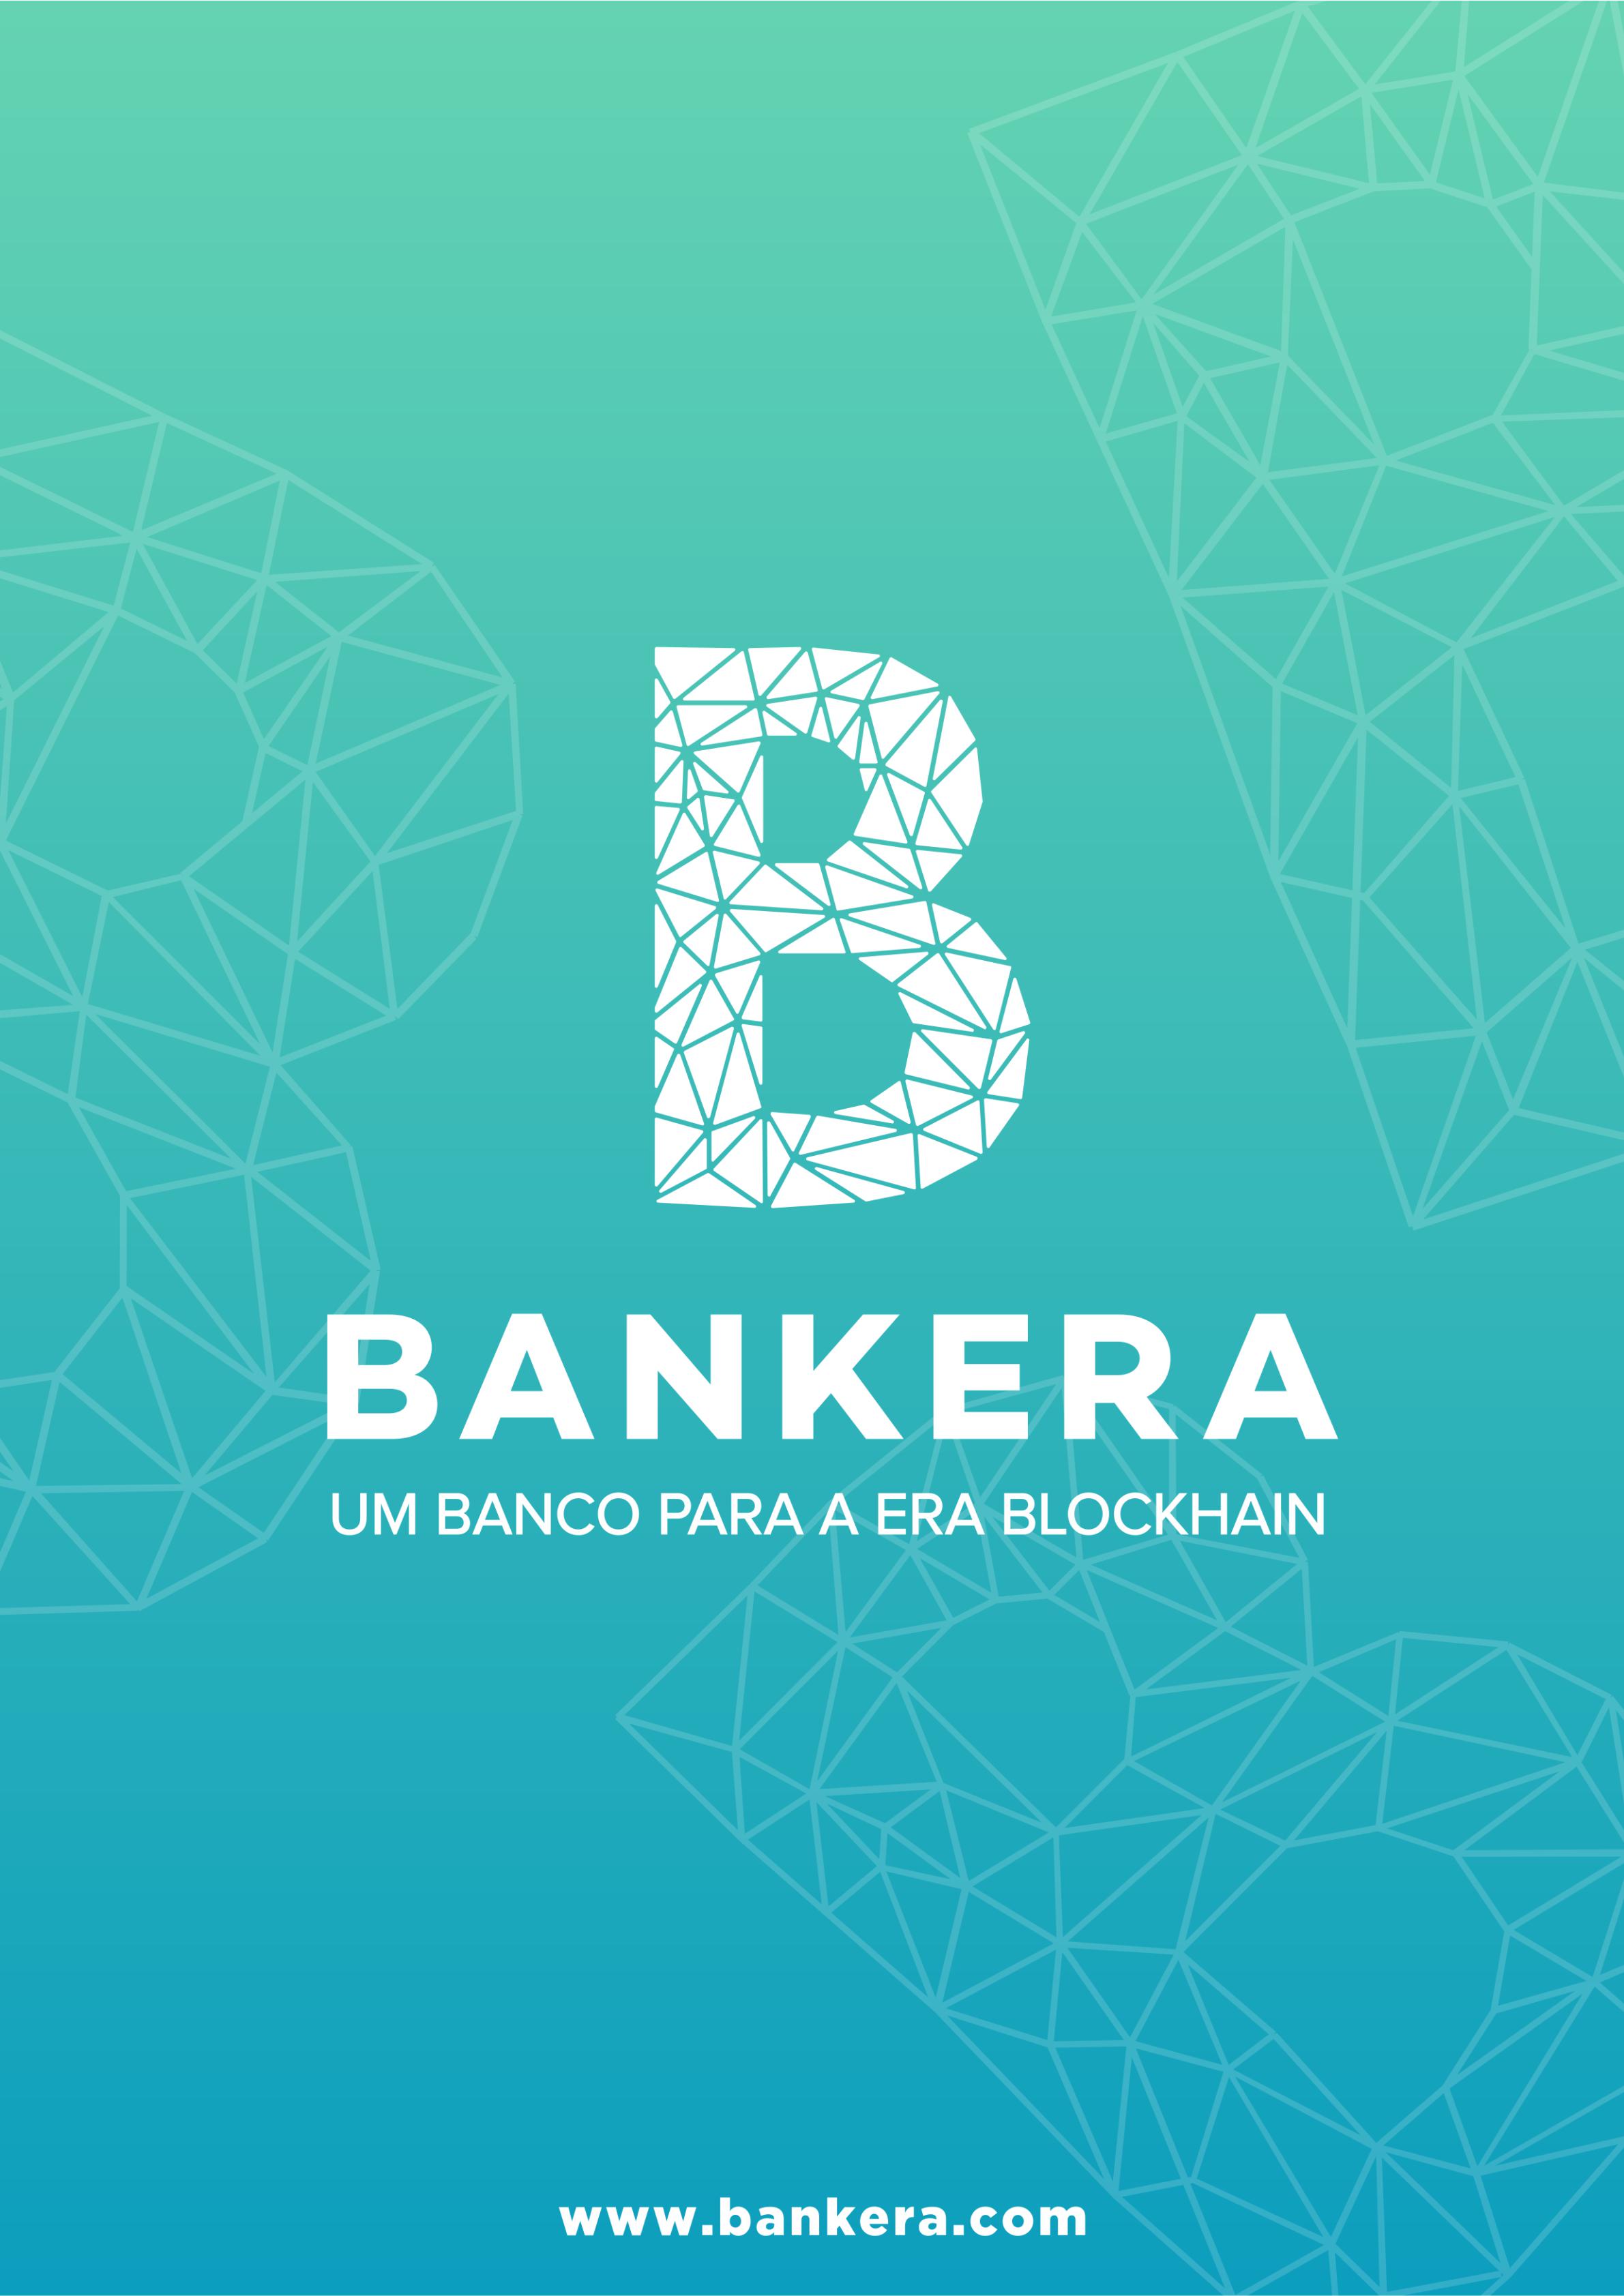 BNK_Bankera_whitepaper_PT_00.jpg